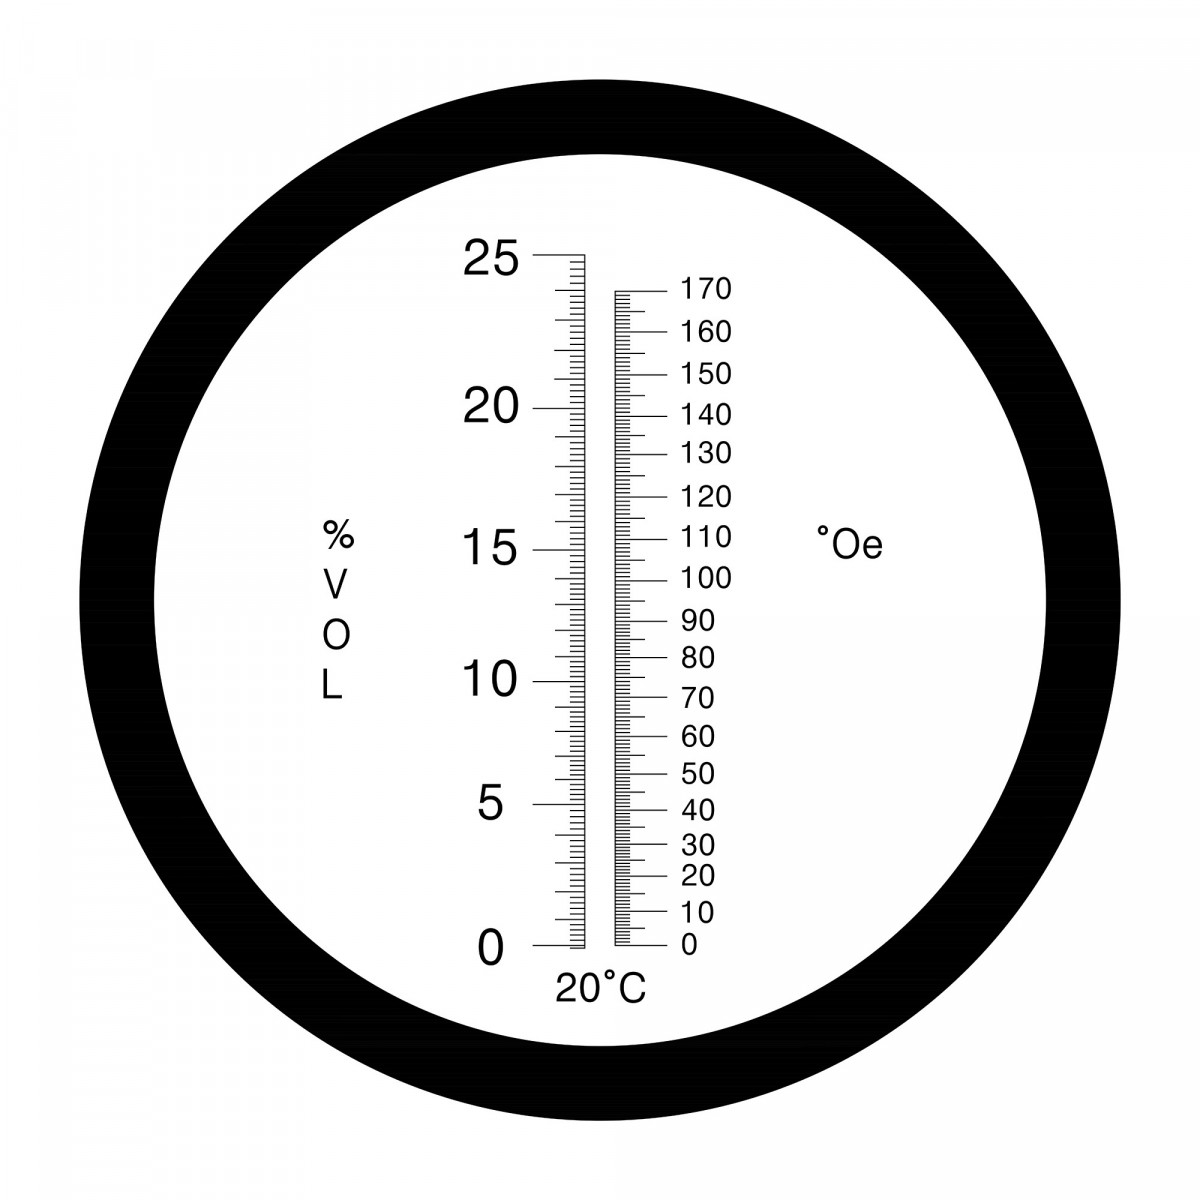 Kaufe Hand-ATC-Refraktometer, Alkohol 0–25 % 0–40 % Brix, Zucker